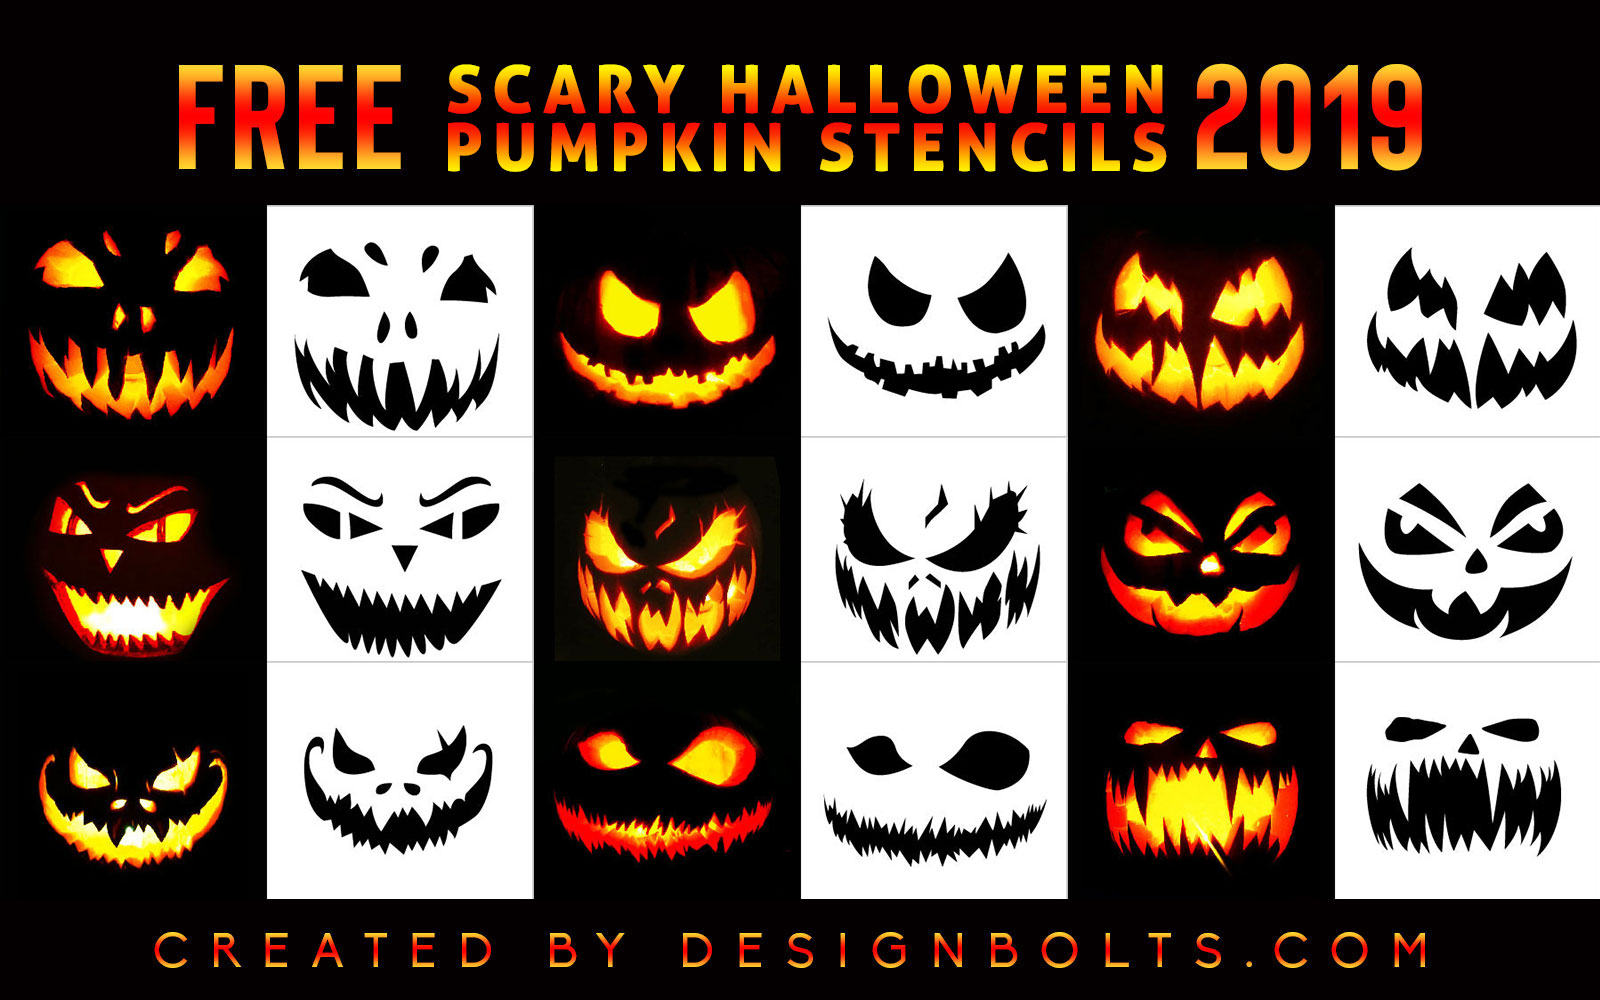 10 Free Scary Halloween Pumpkin Carving Stencils Patterns Ideas 2019 Jack O Lantern Faces Images Designbolts